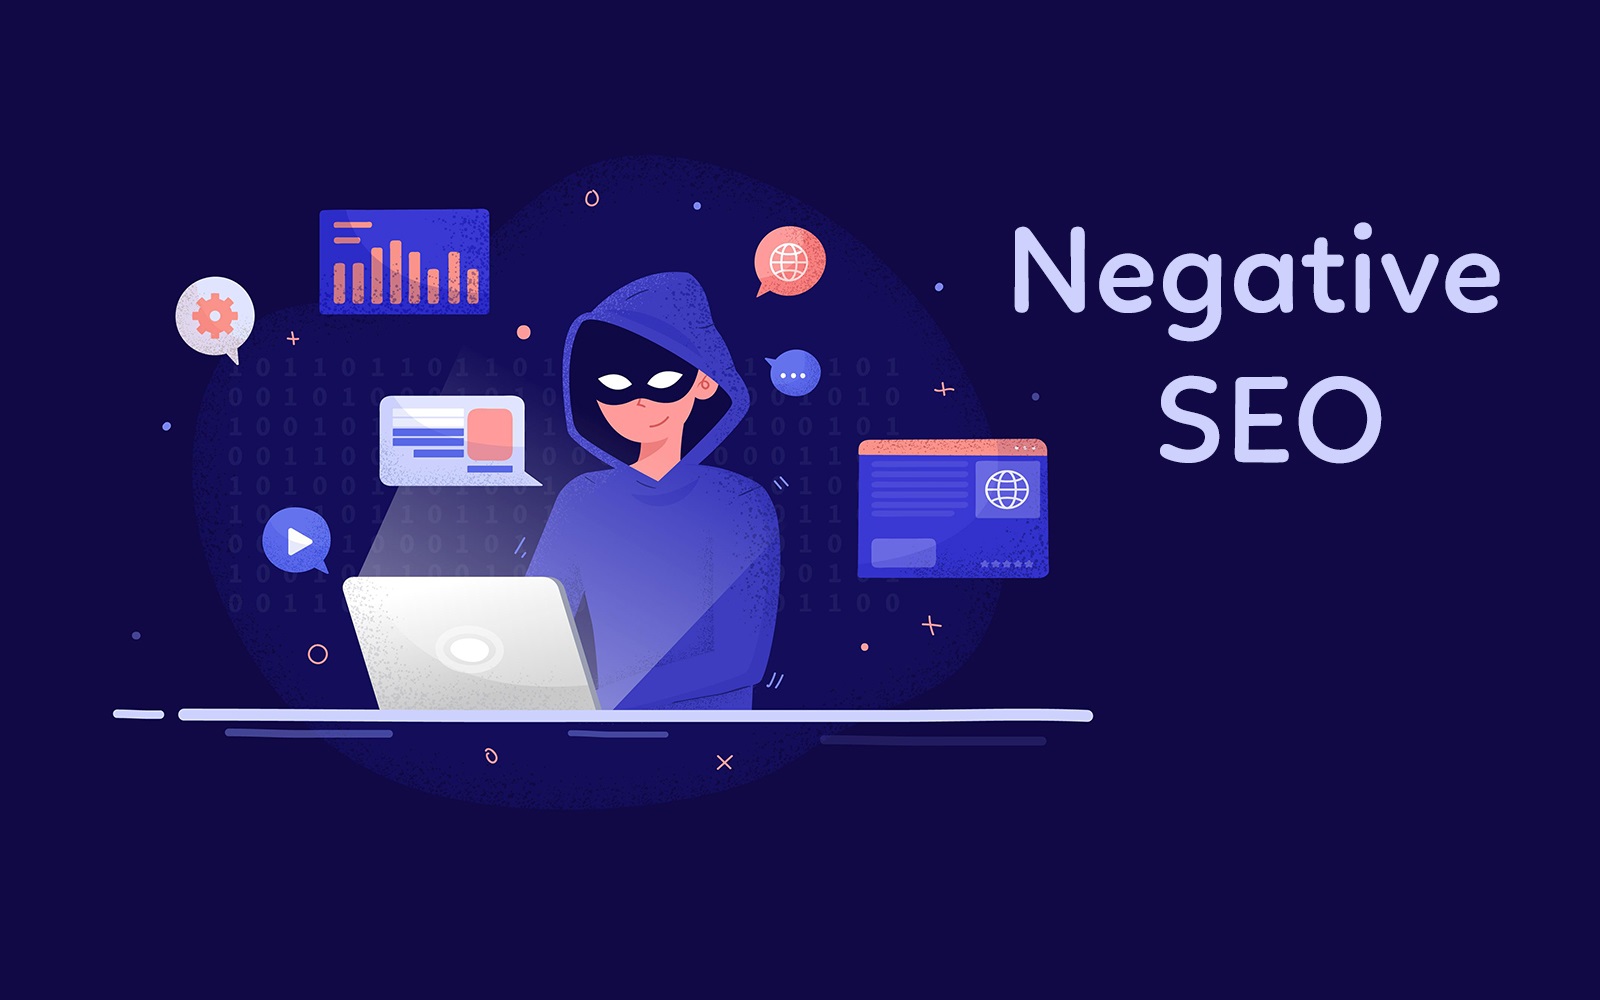 Negative SEO, Search Engine Optimization, SEO, Black hat SEO, Negetive, SEO Consultant